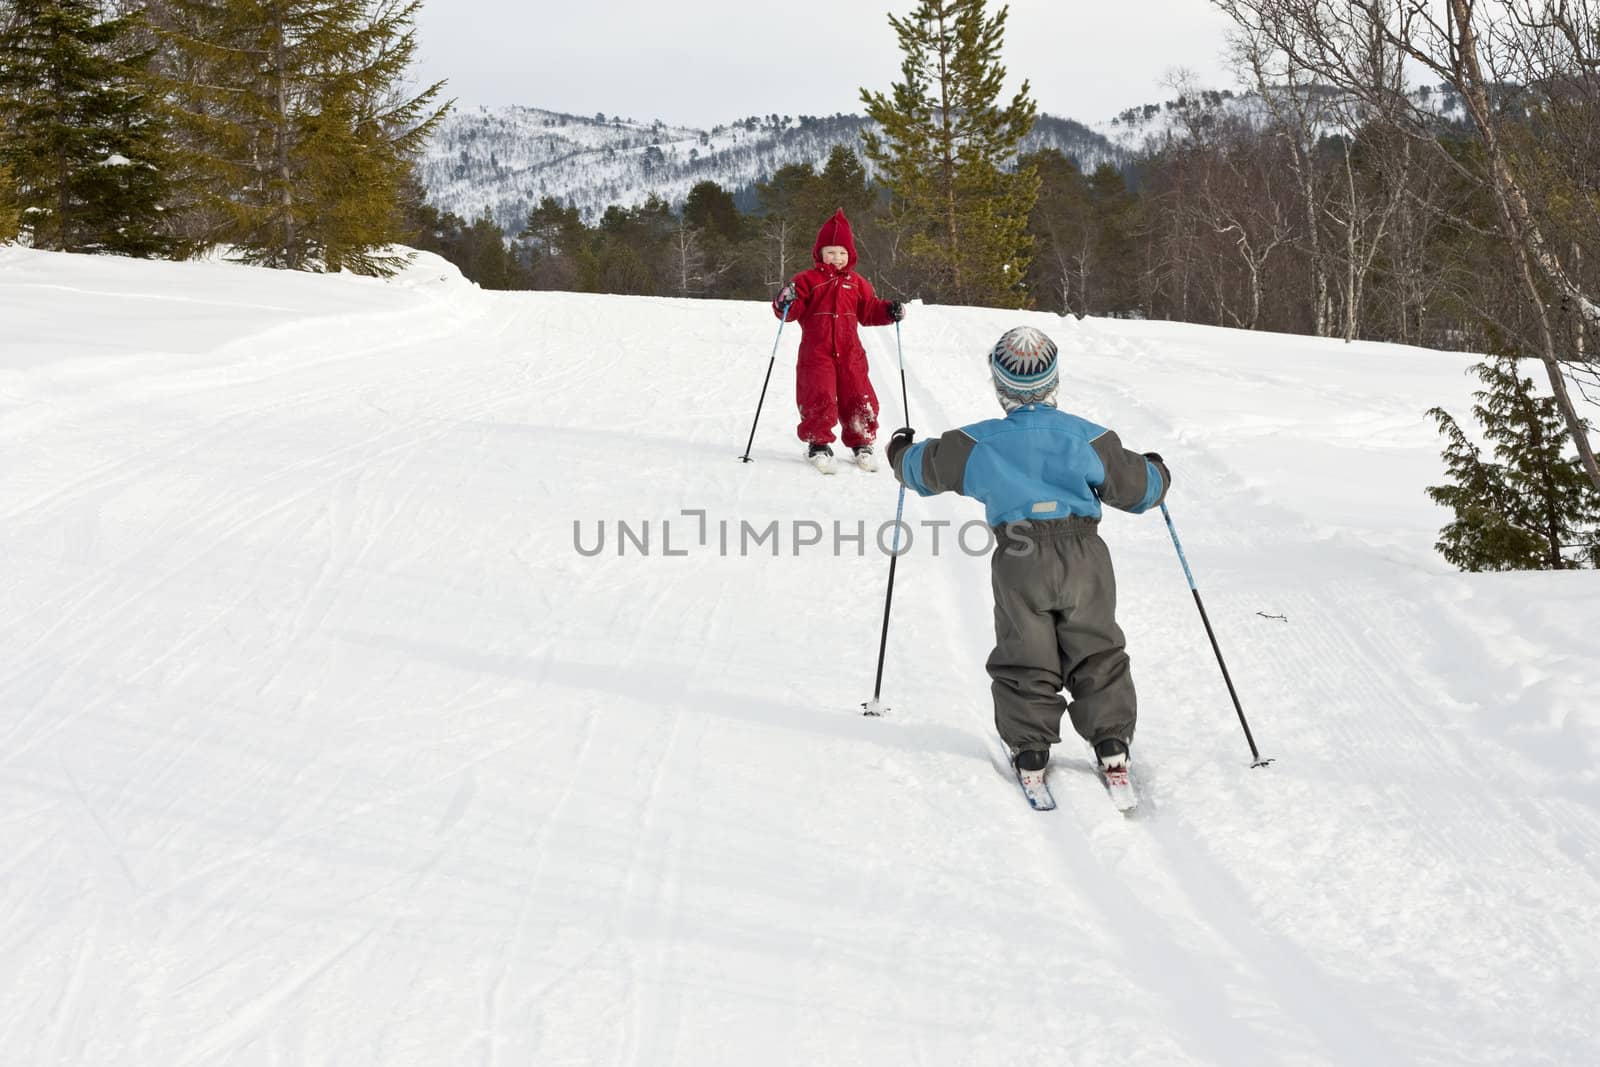 Happy small children meeting in the ski tracks